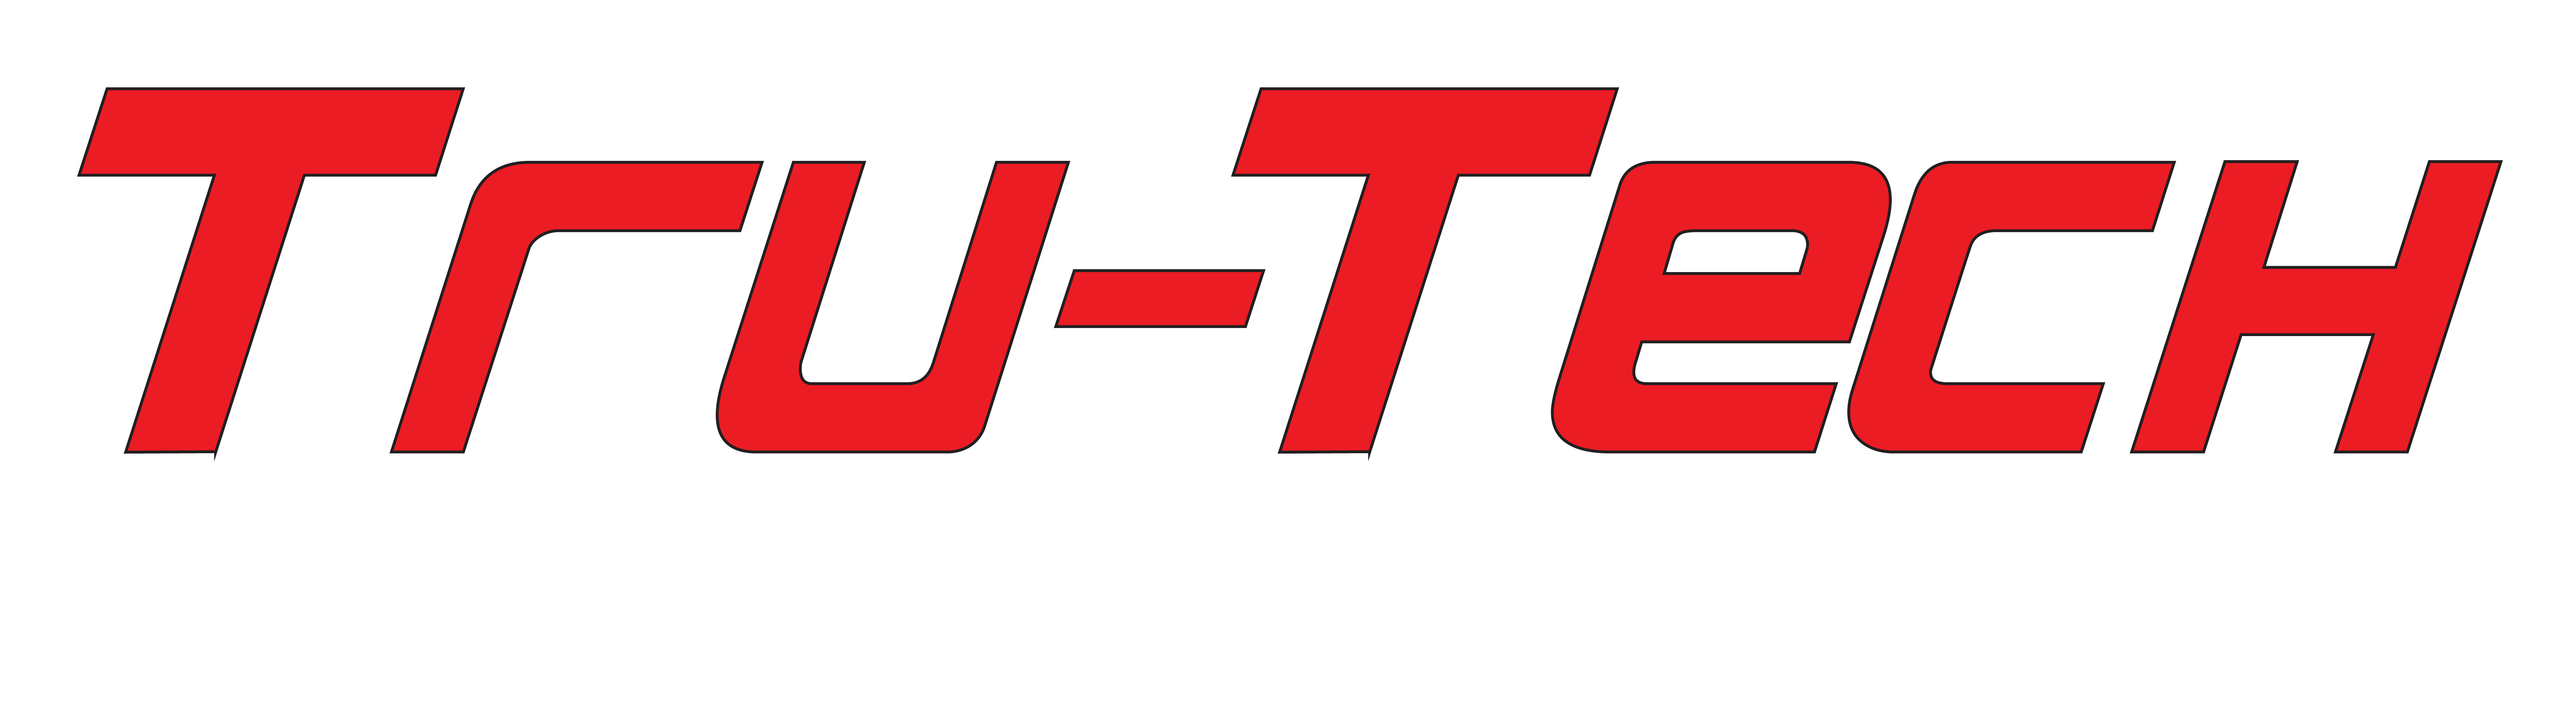 Trutech Logo - Tru Tech AV / Video Solutions